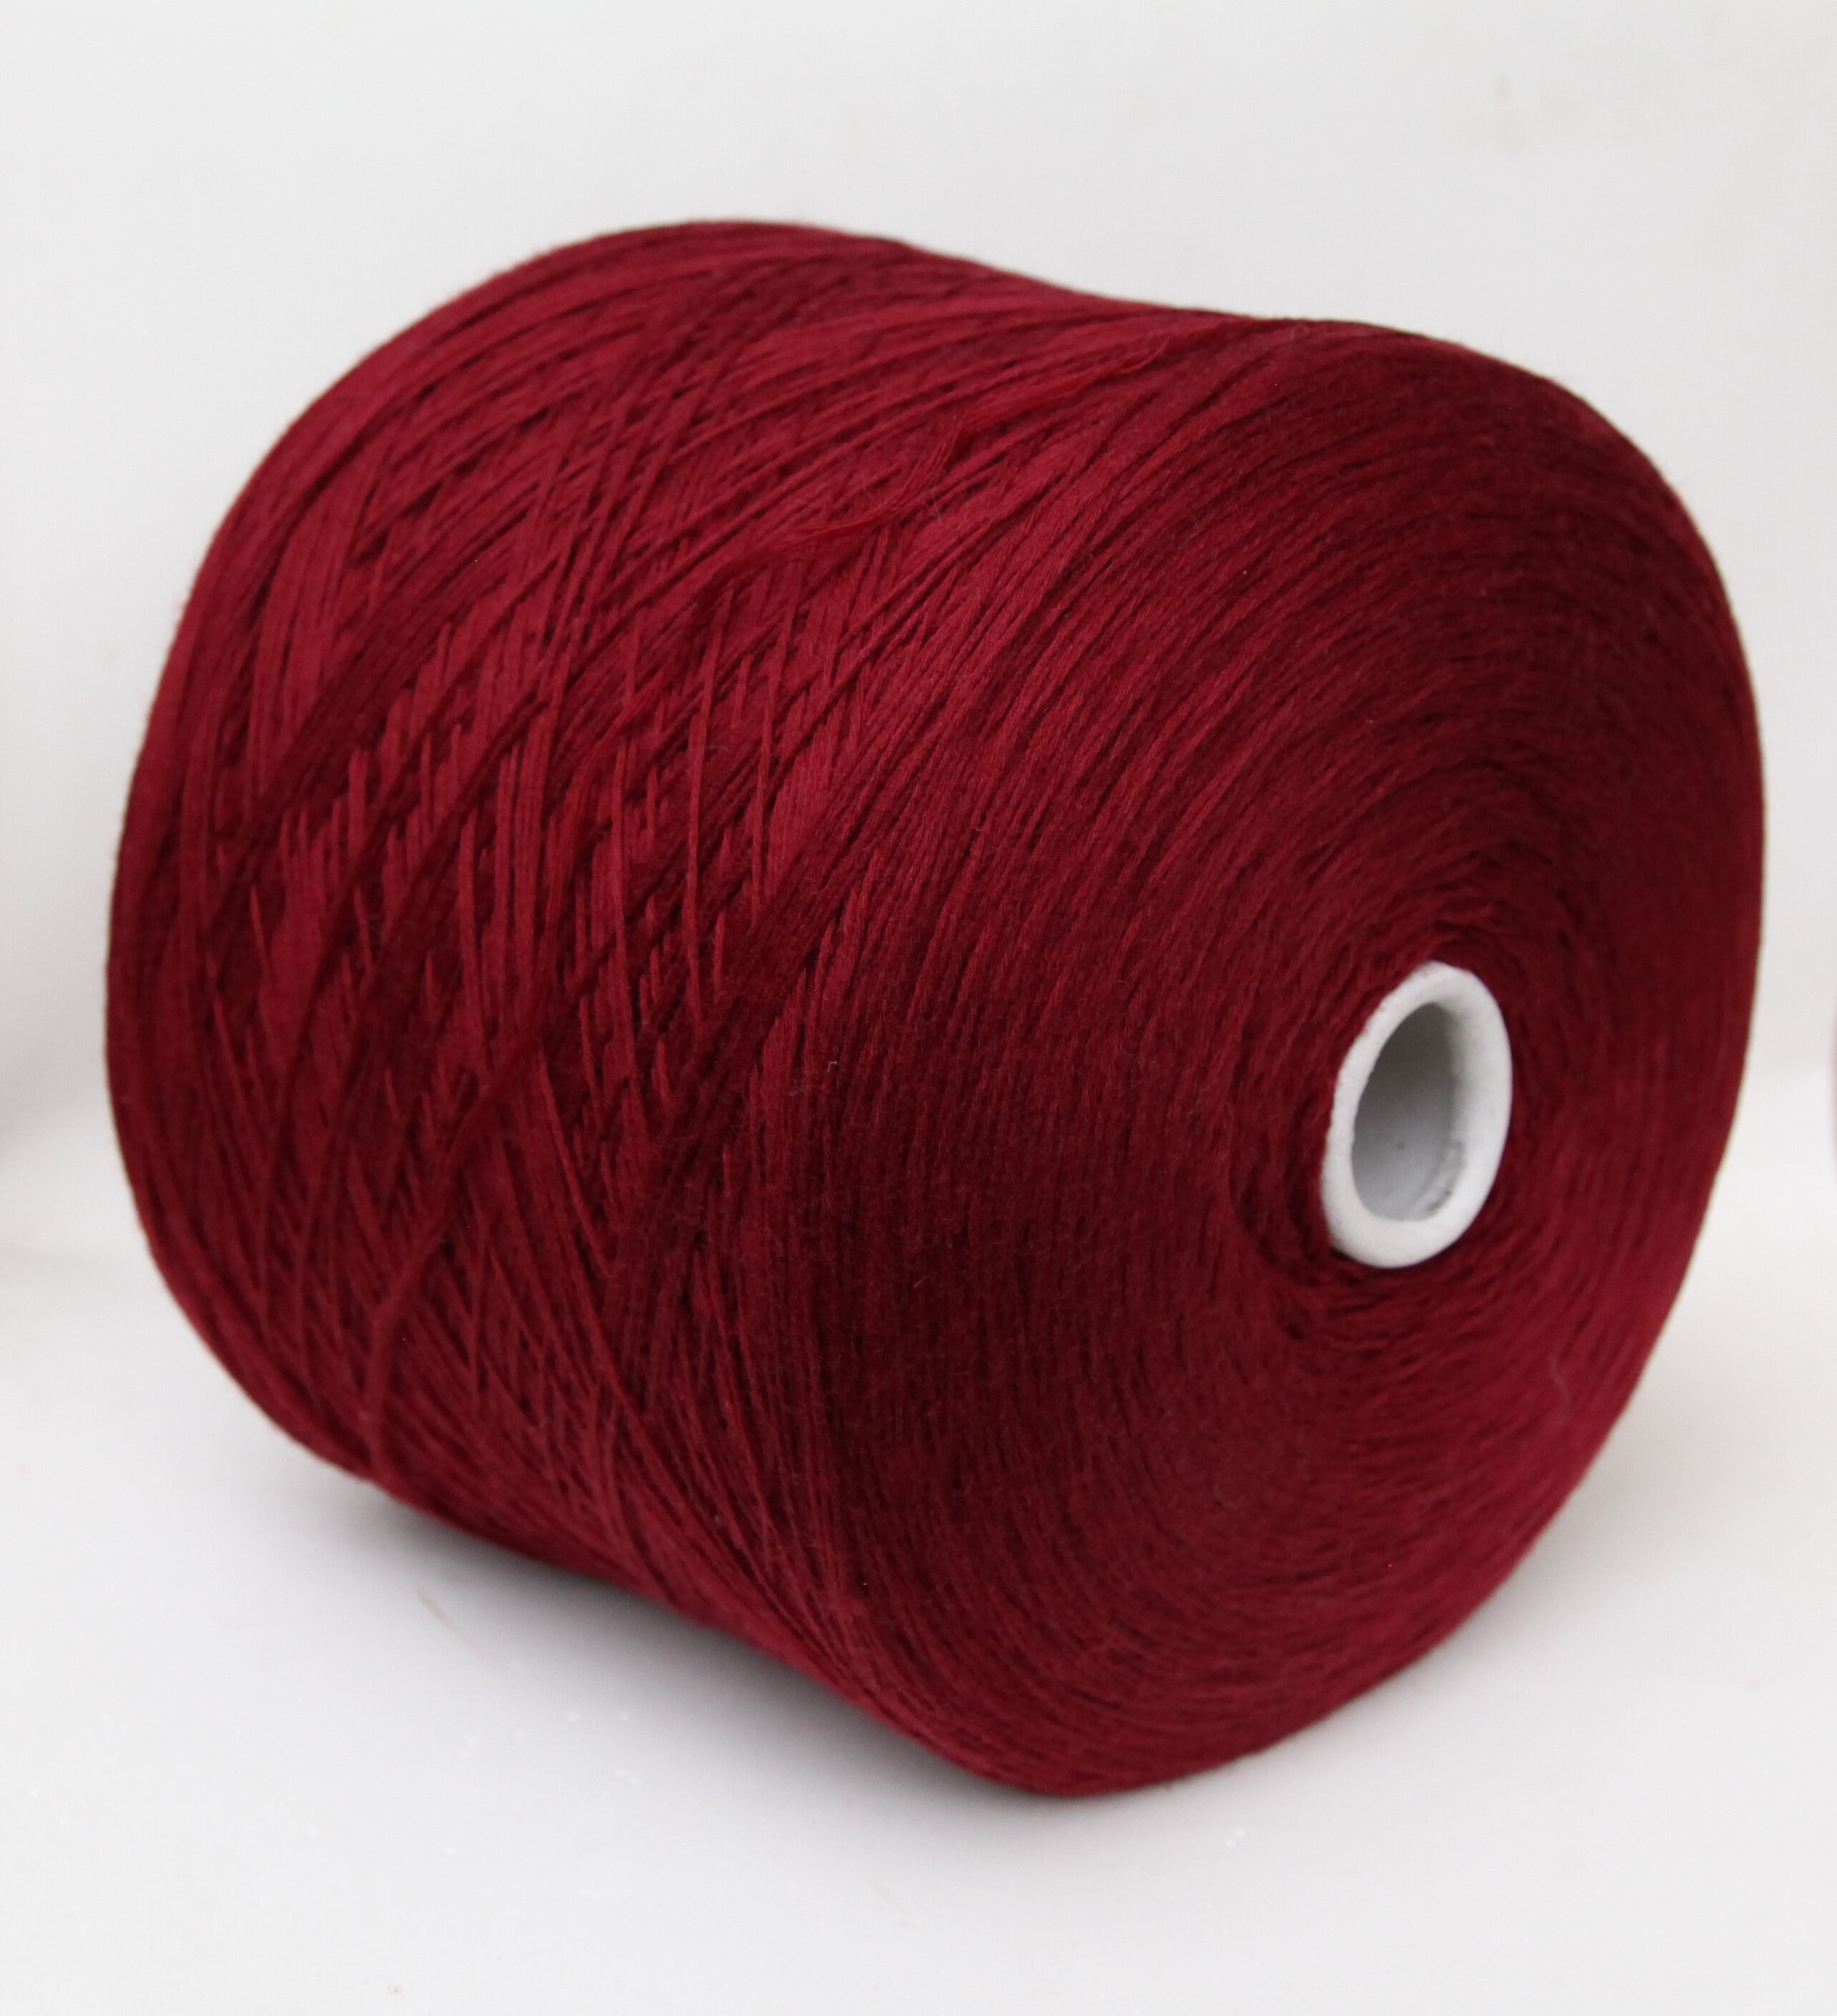 500g Crochet Knitting Machine 100% Wool 3ply Italian Yarn on Cone per 1.1lb 